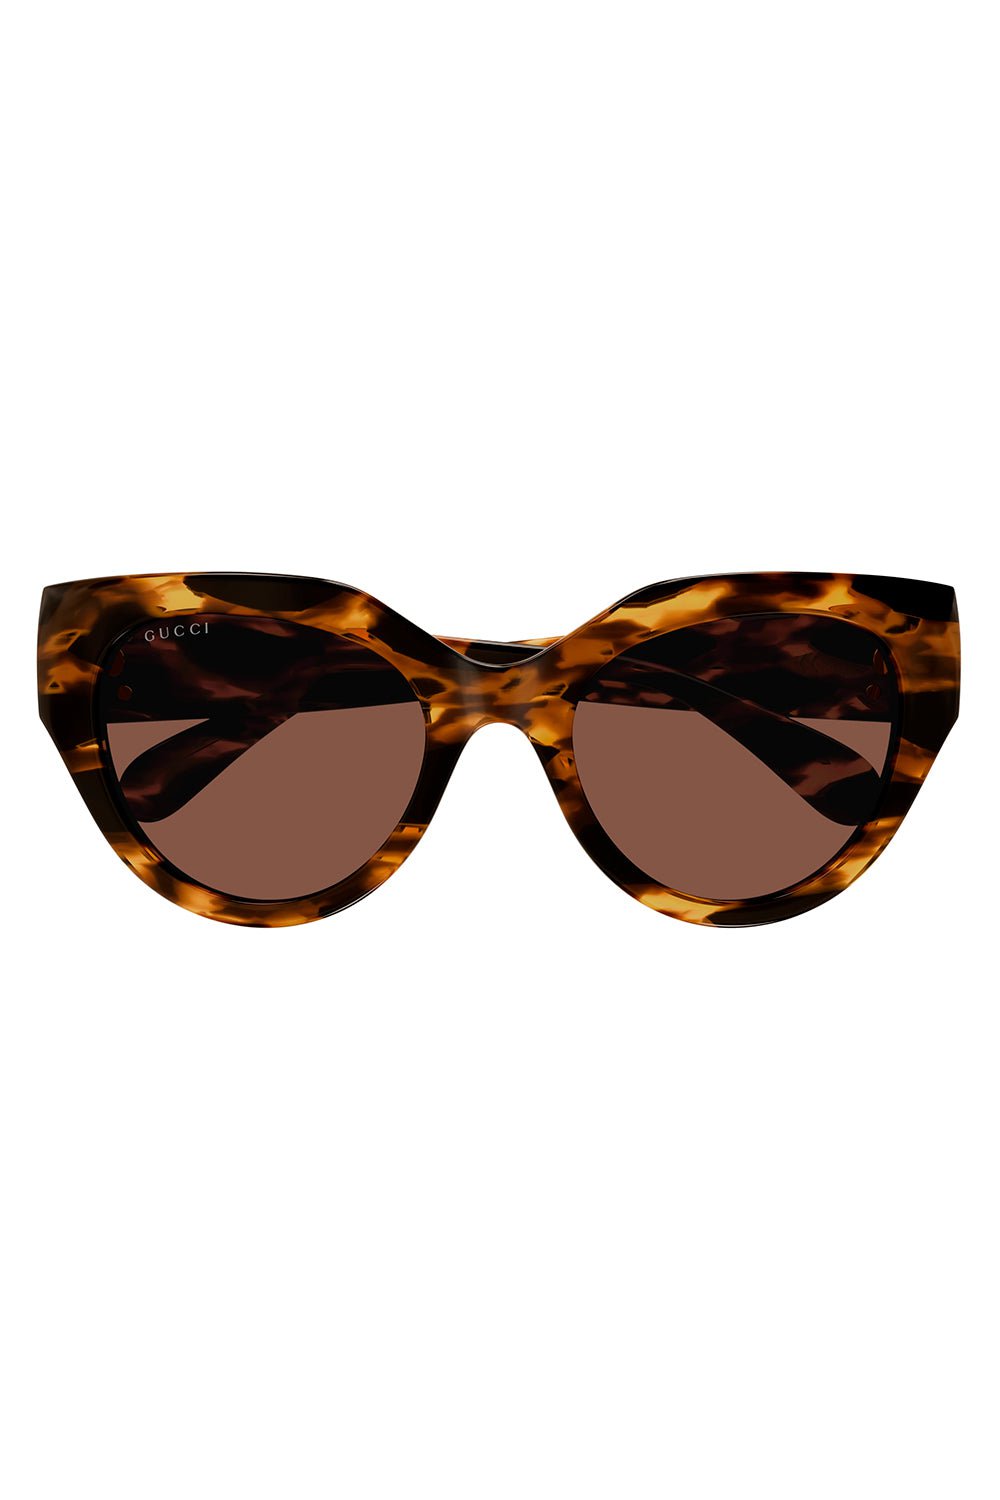 GUCCI-Le Bouton Cat Eye Sunglasses-HAVANA/BLACK